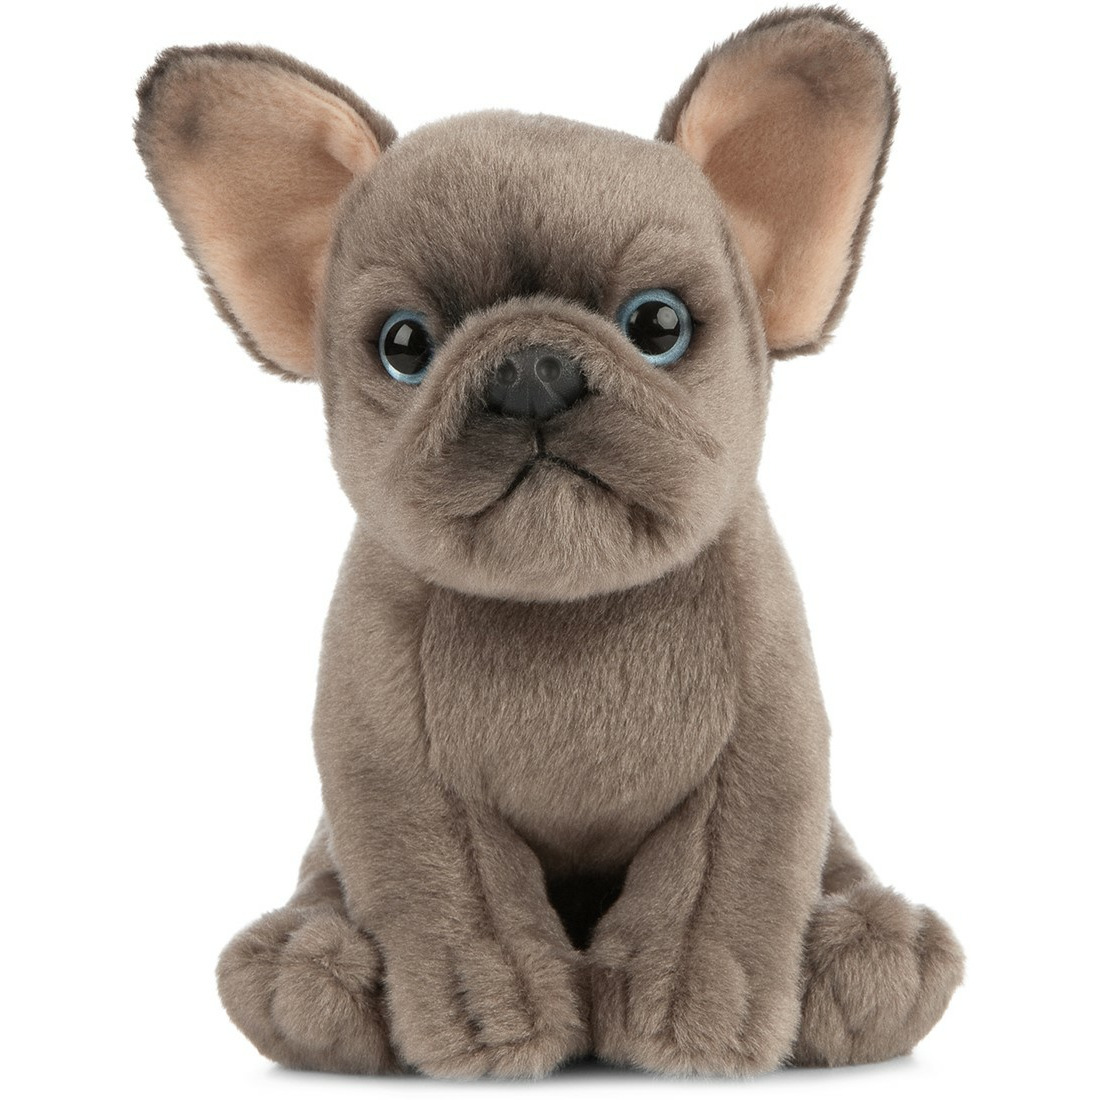 Knuffel Franse Bulldog hond grijs 15 cm knuffels kopen